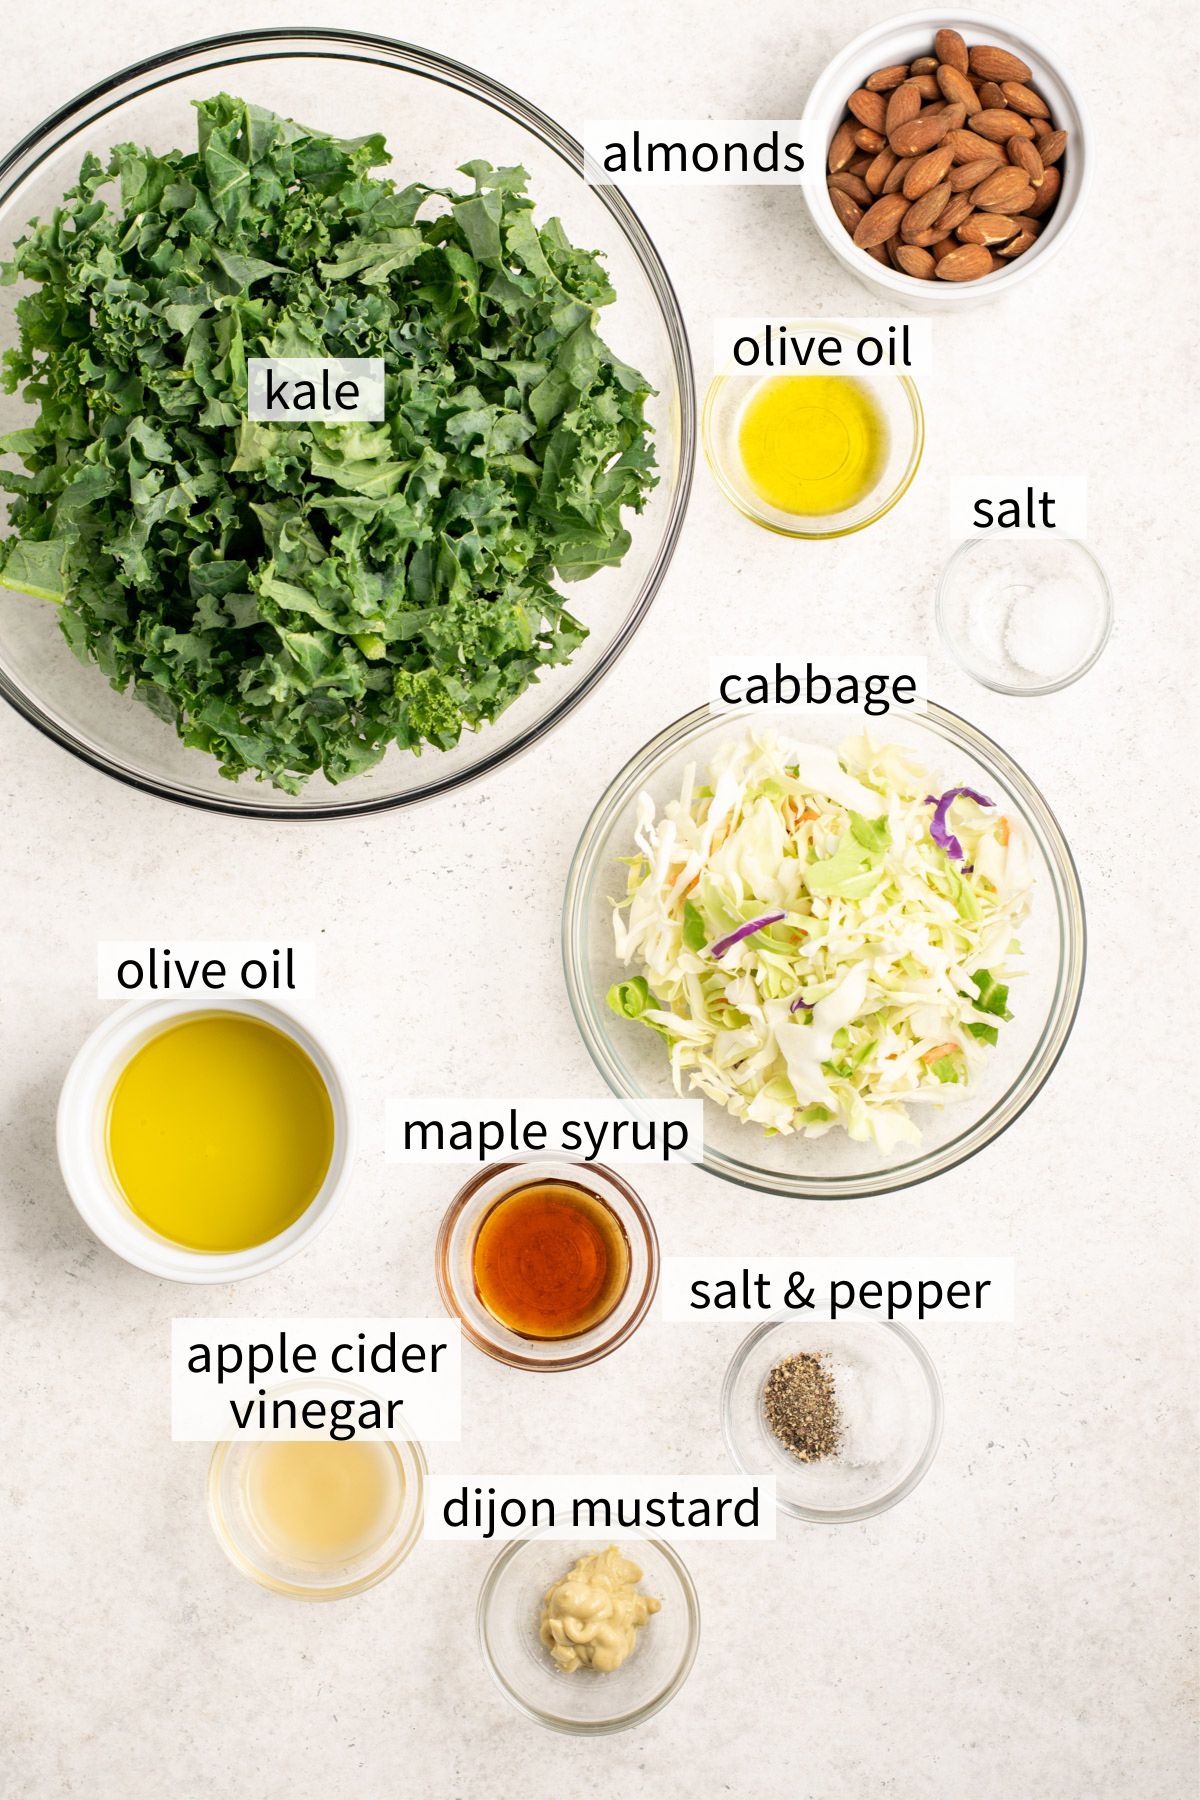 ingredients to make chick-fil-a kale crunch salad copycat.